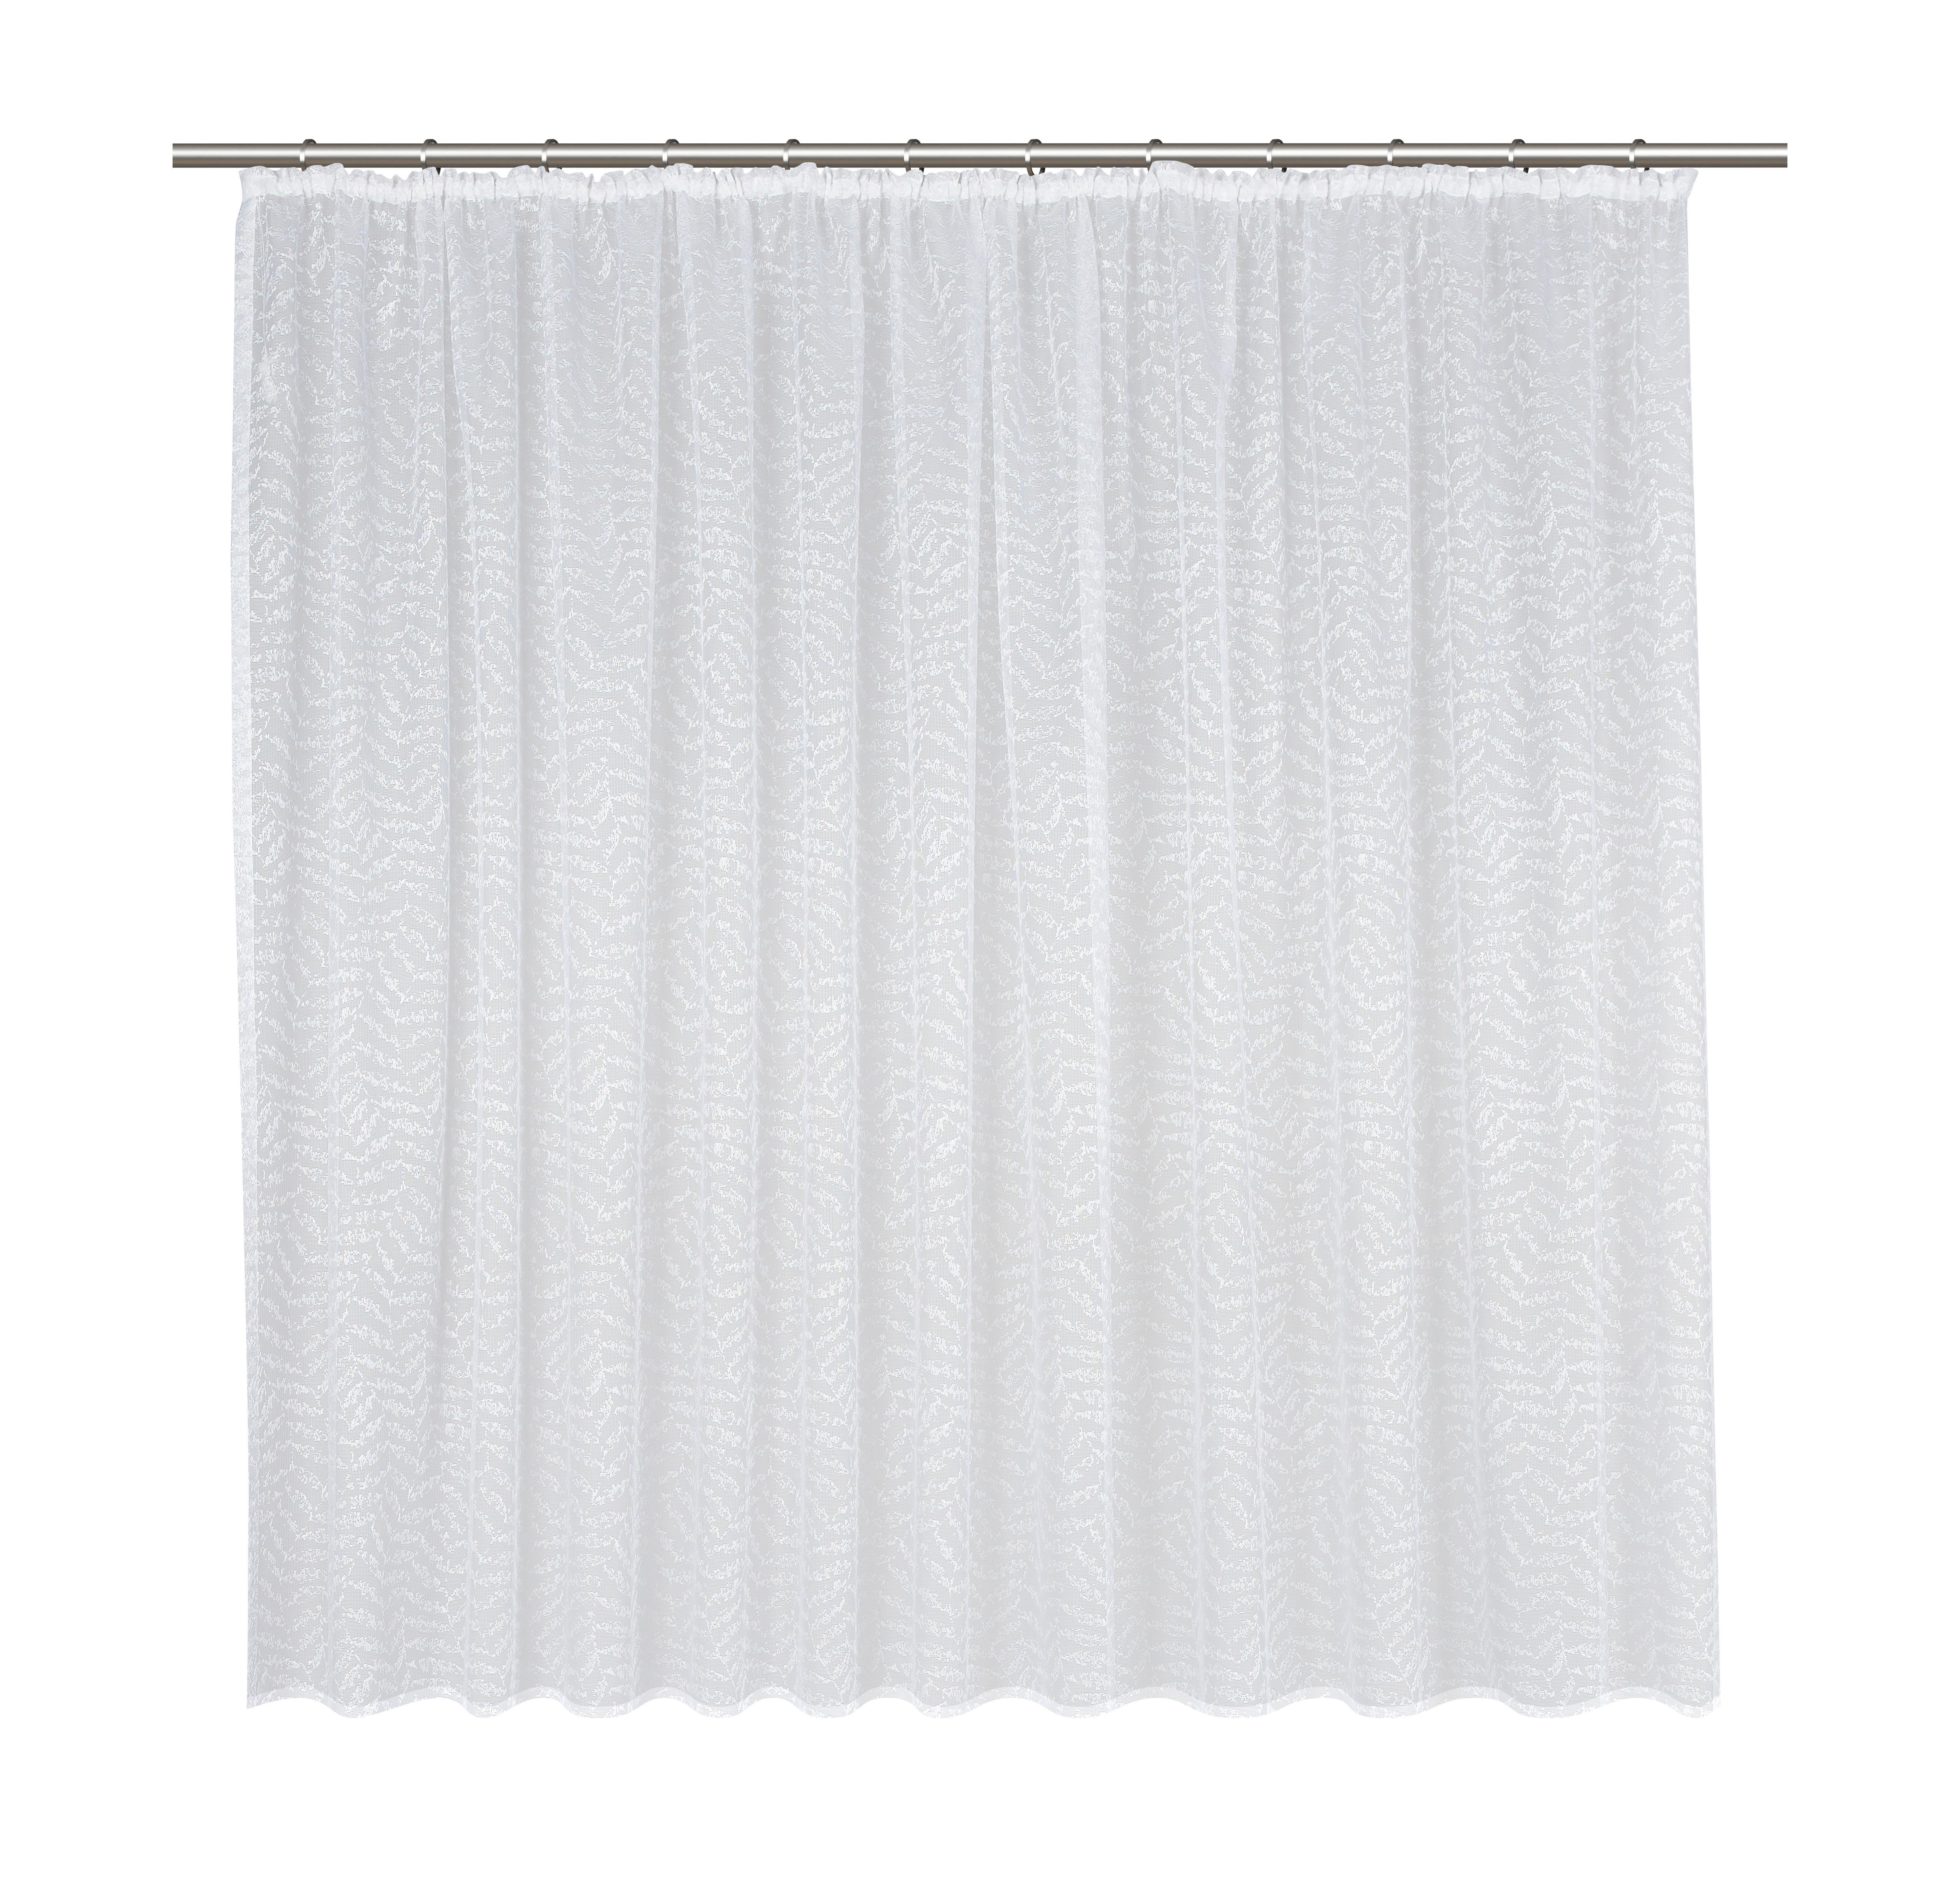 Fertigstore Rita Store 2 ca. 300x175cm - Weiß, KONVENTIONELL, Textil (300/175cm) - Modern Living